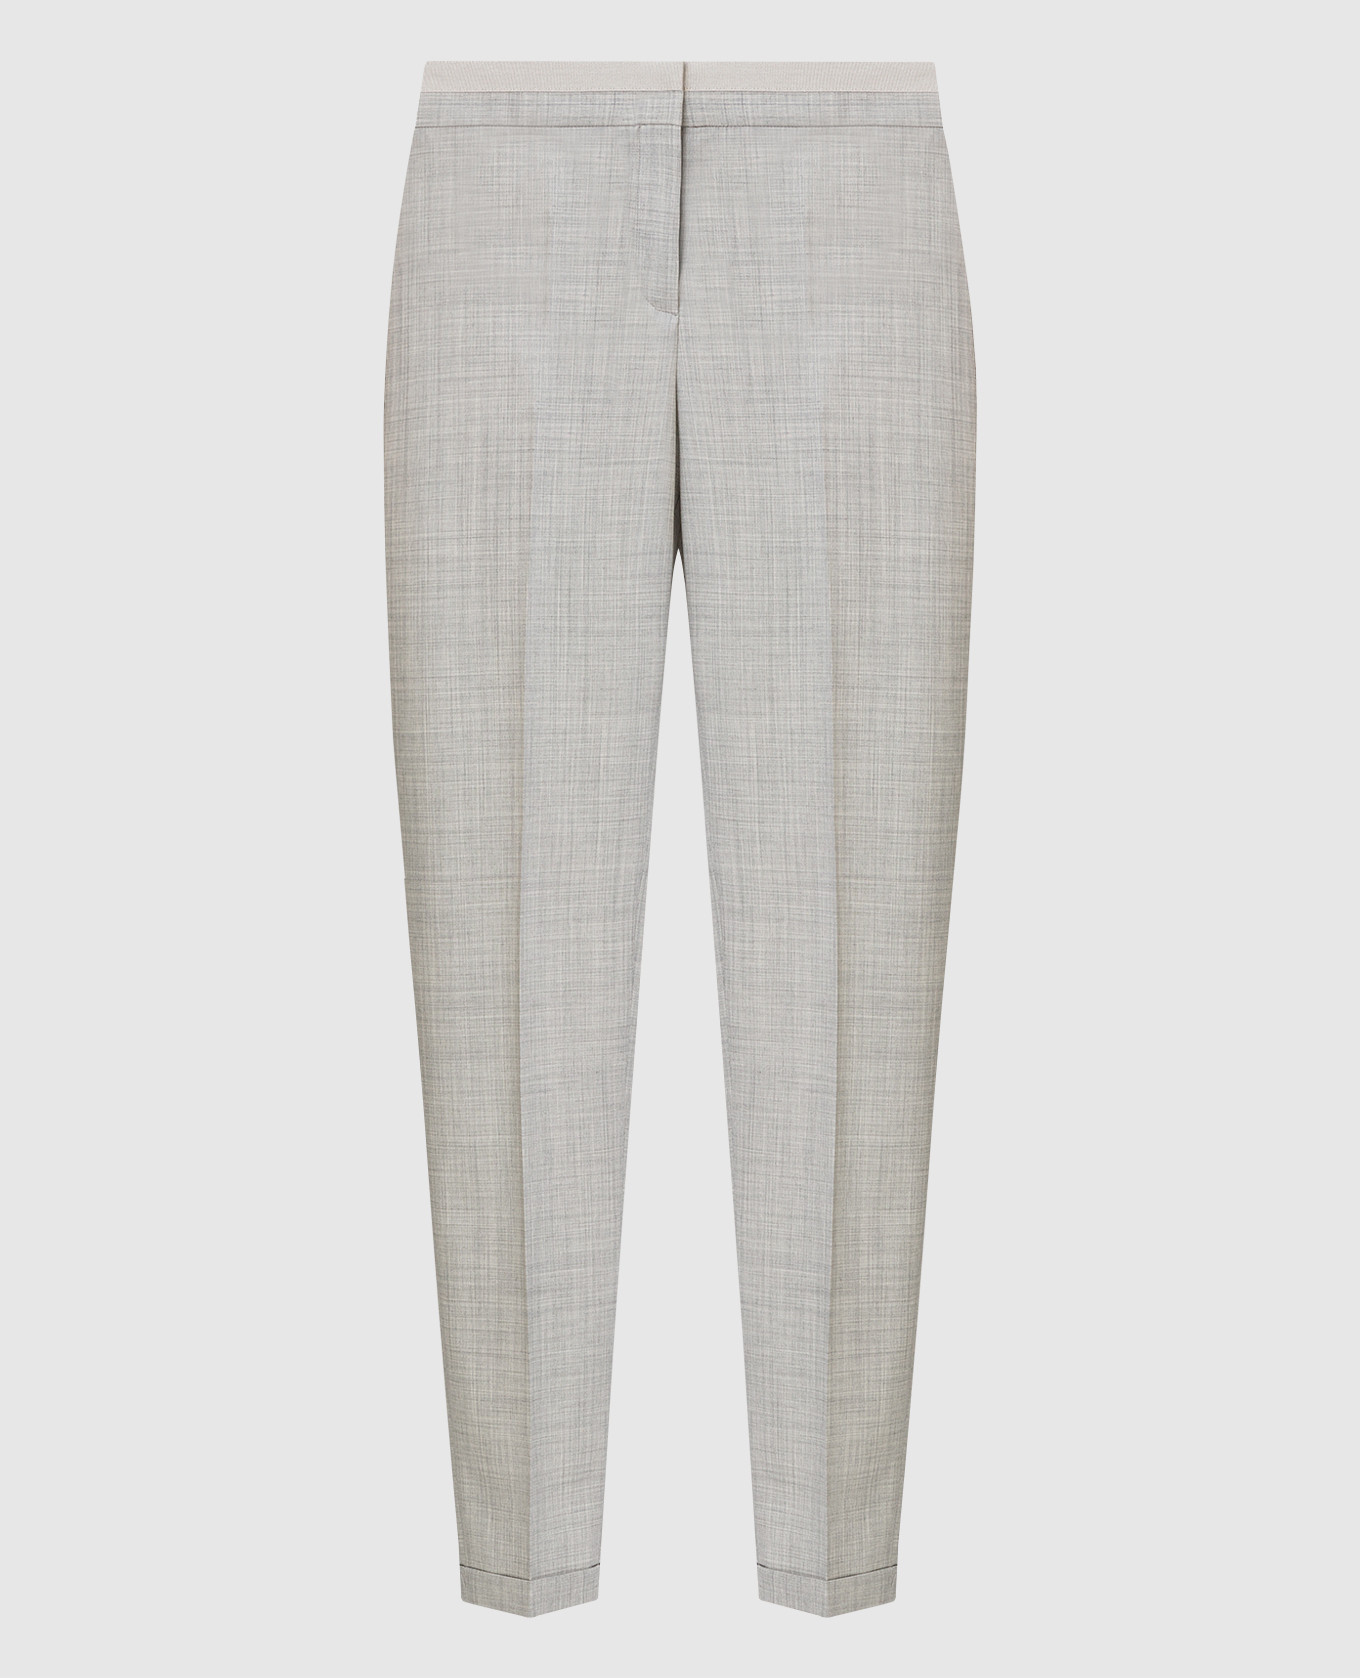 Light gray wool trousers